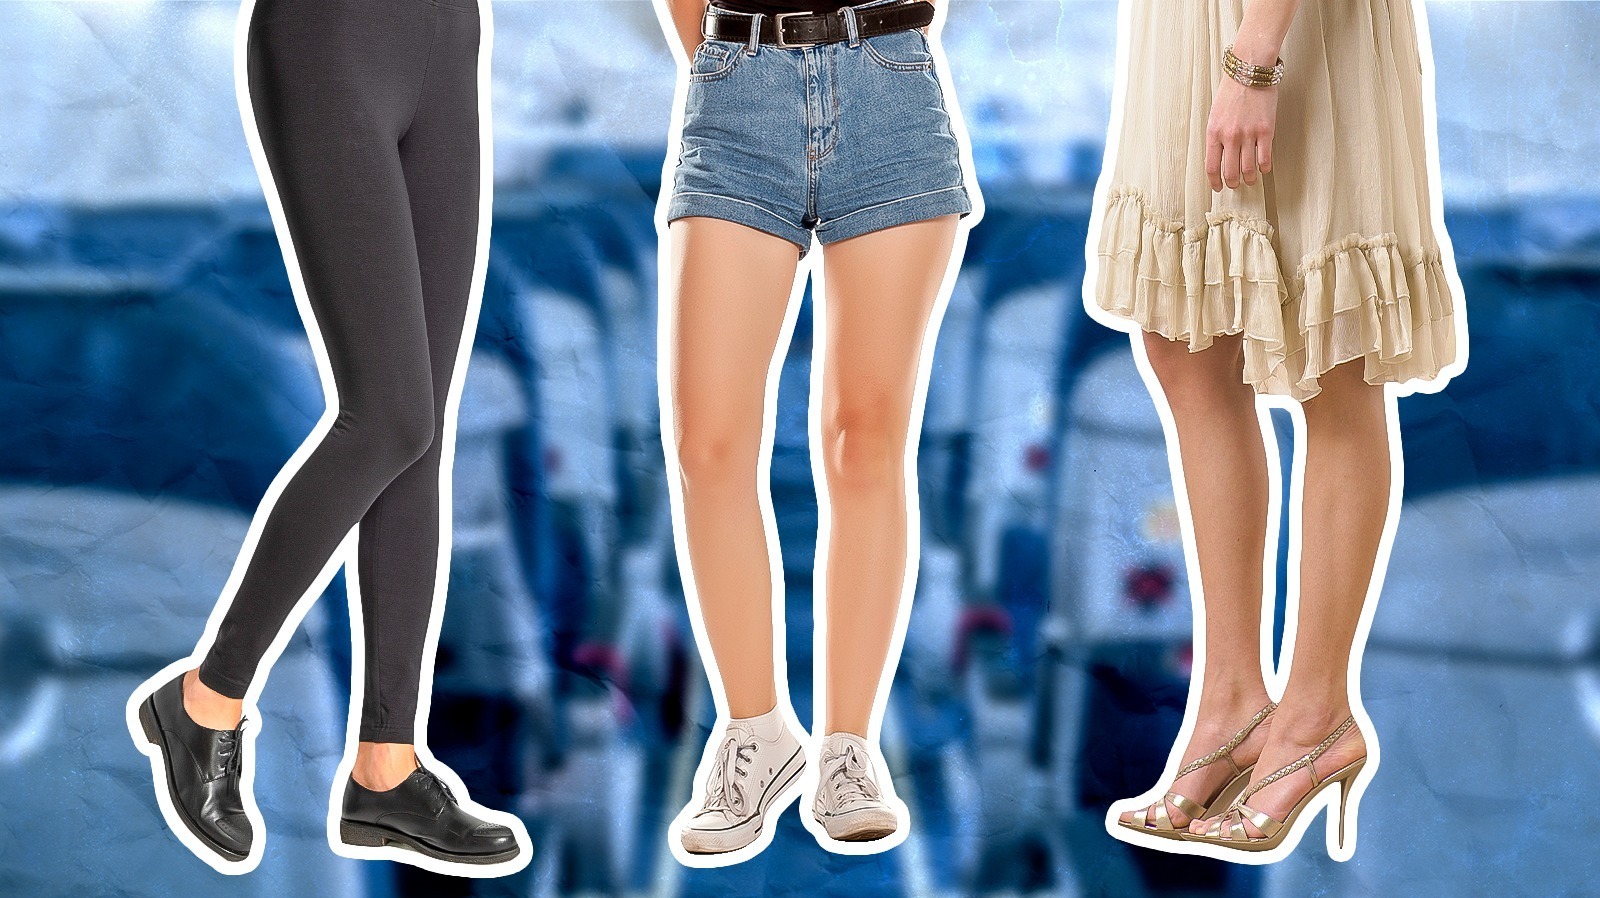 How To Wear Leggings: Things To Avoid When You Wear Leggings